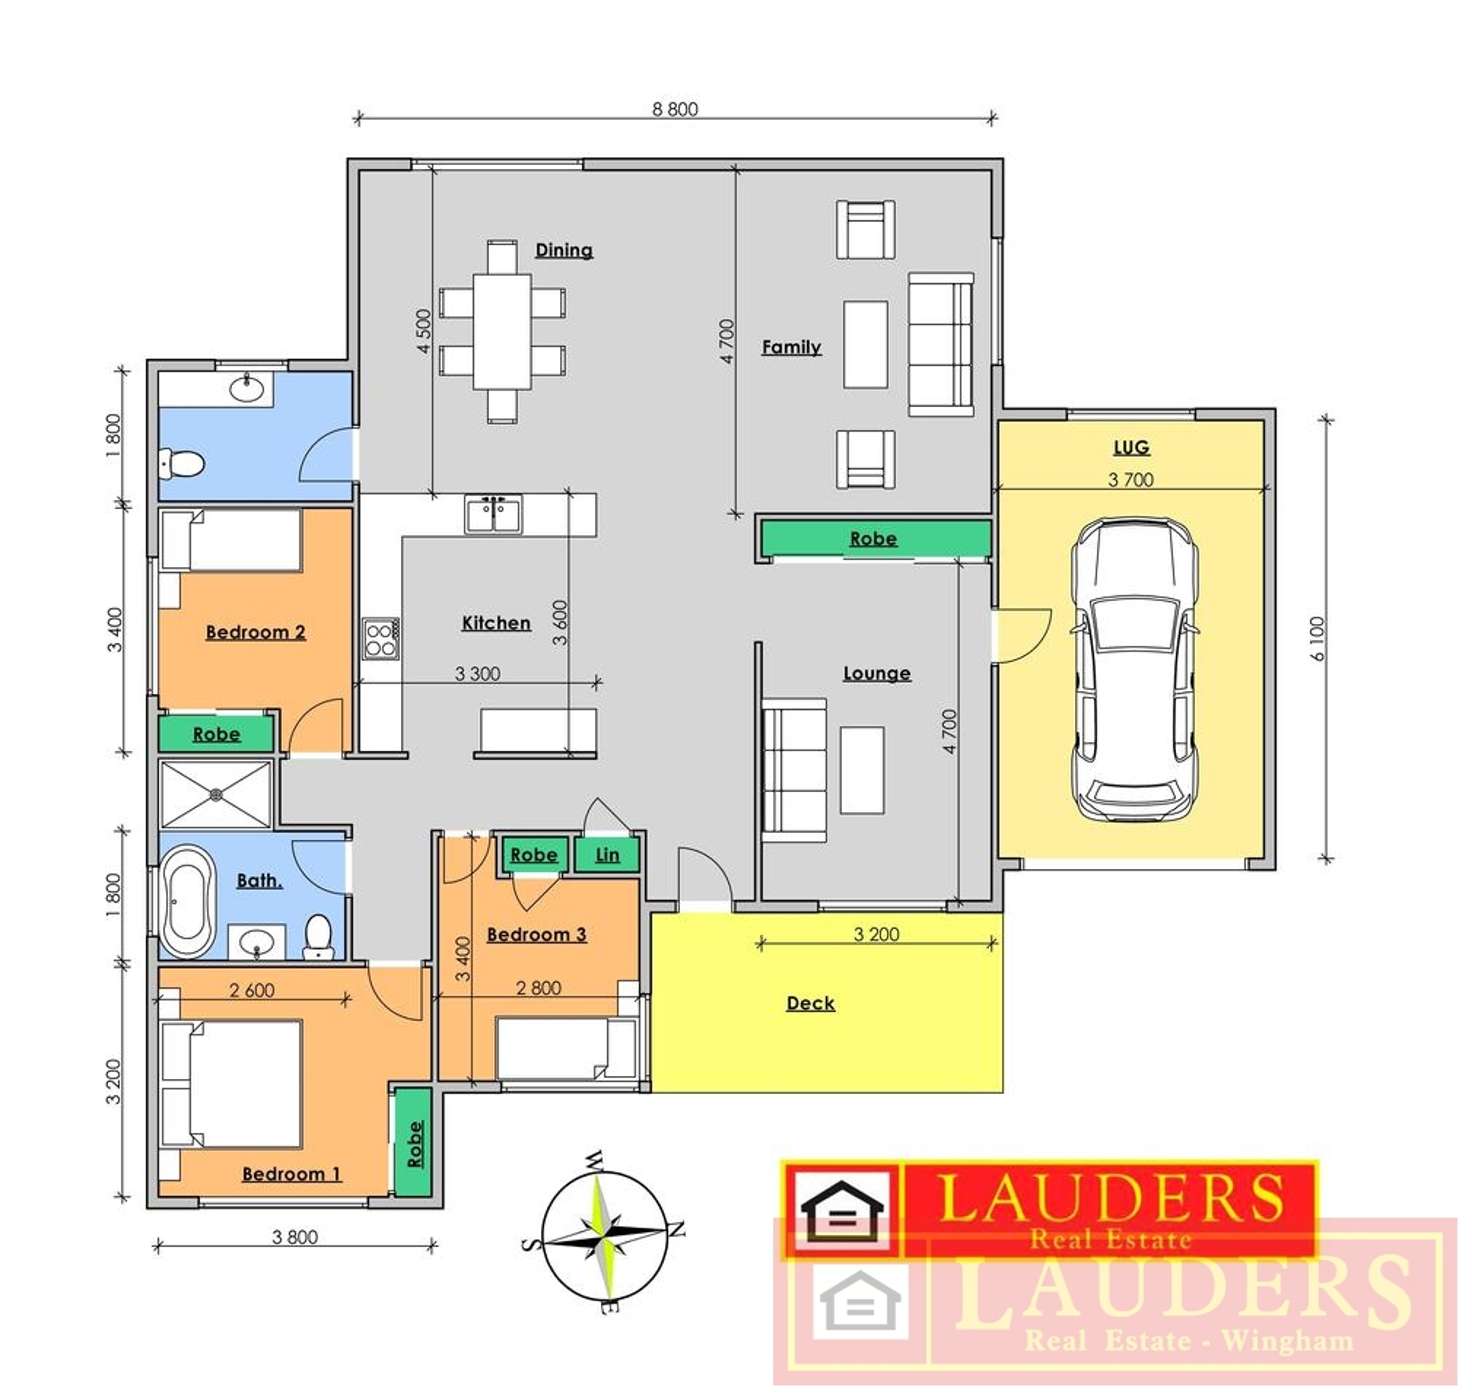 Floorplan of Homely house listing, 22 Killawarra Street, Wingham NSW 2429